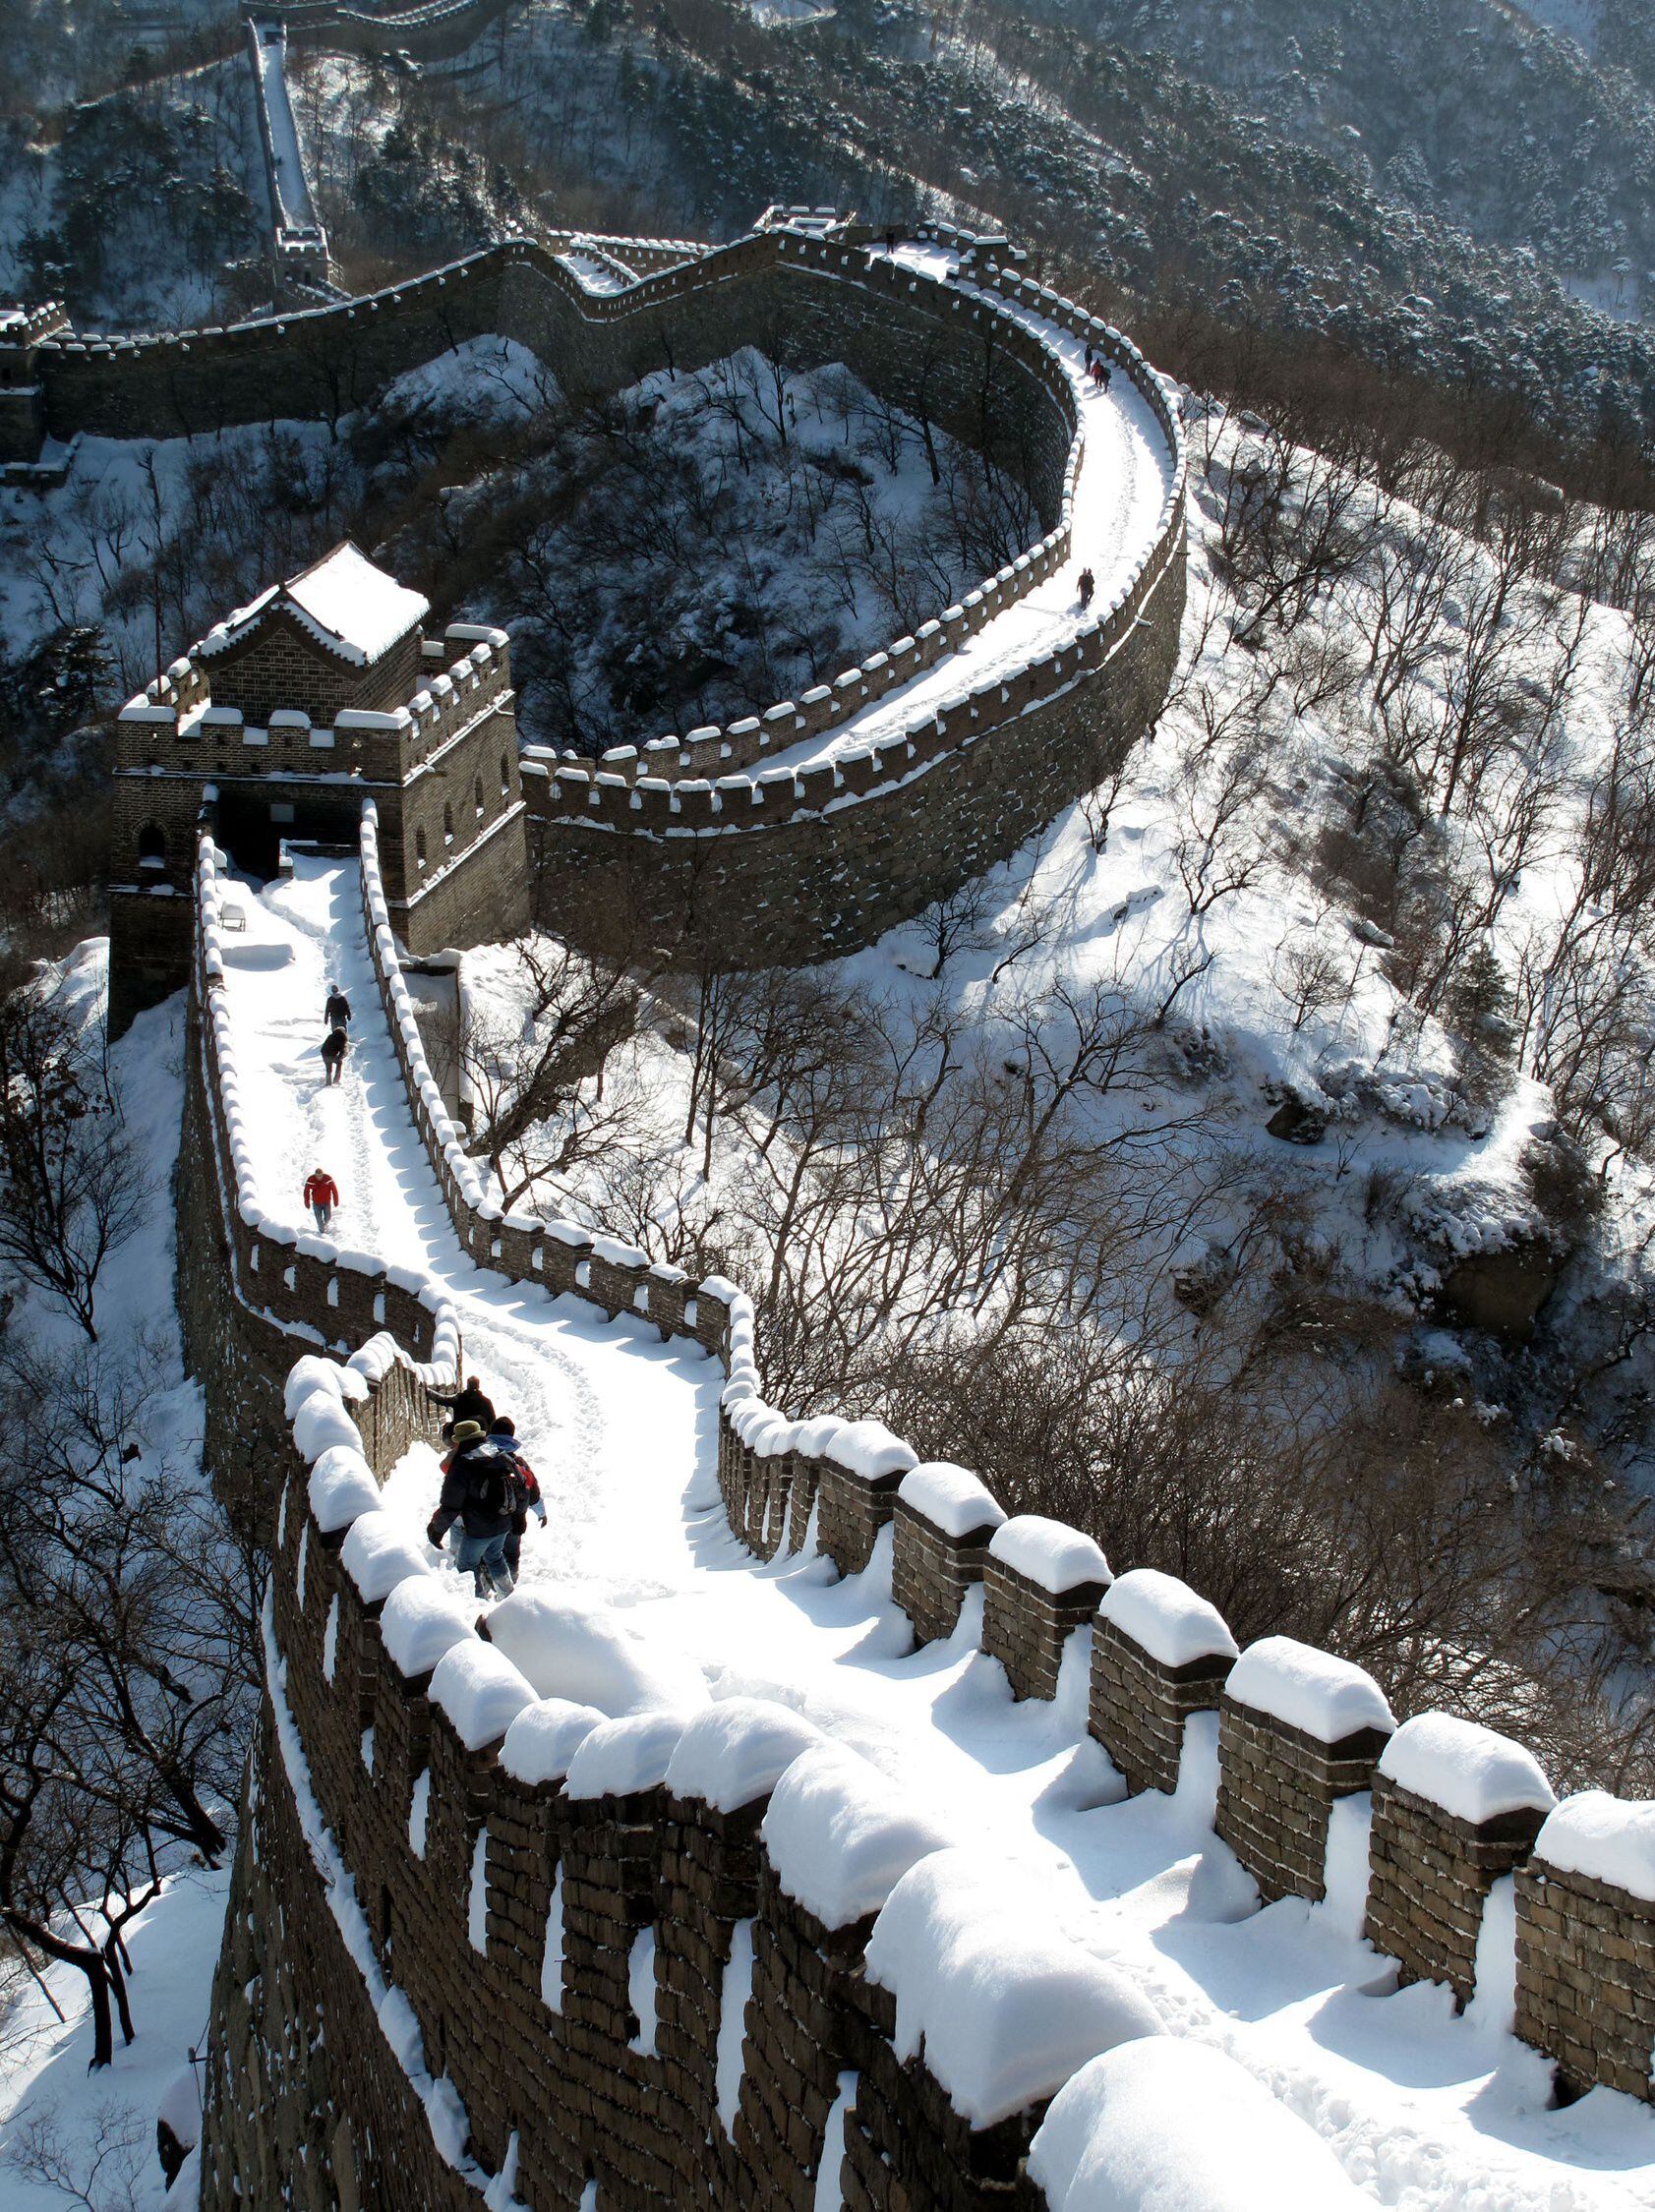 BJN00104118. La Gran Muralla China, en la sección de Mutianyu, se observa cubierta de nieve, en Beijing, capital de China.
NOTIMEX/FOTO/BU XIANGDONG-XINHUA/COR/WEA/